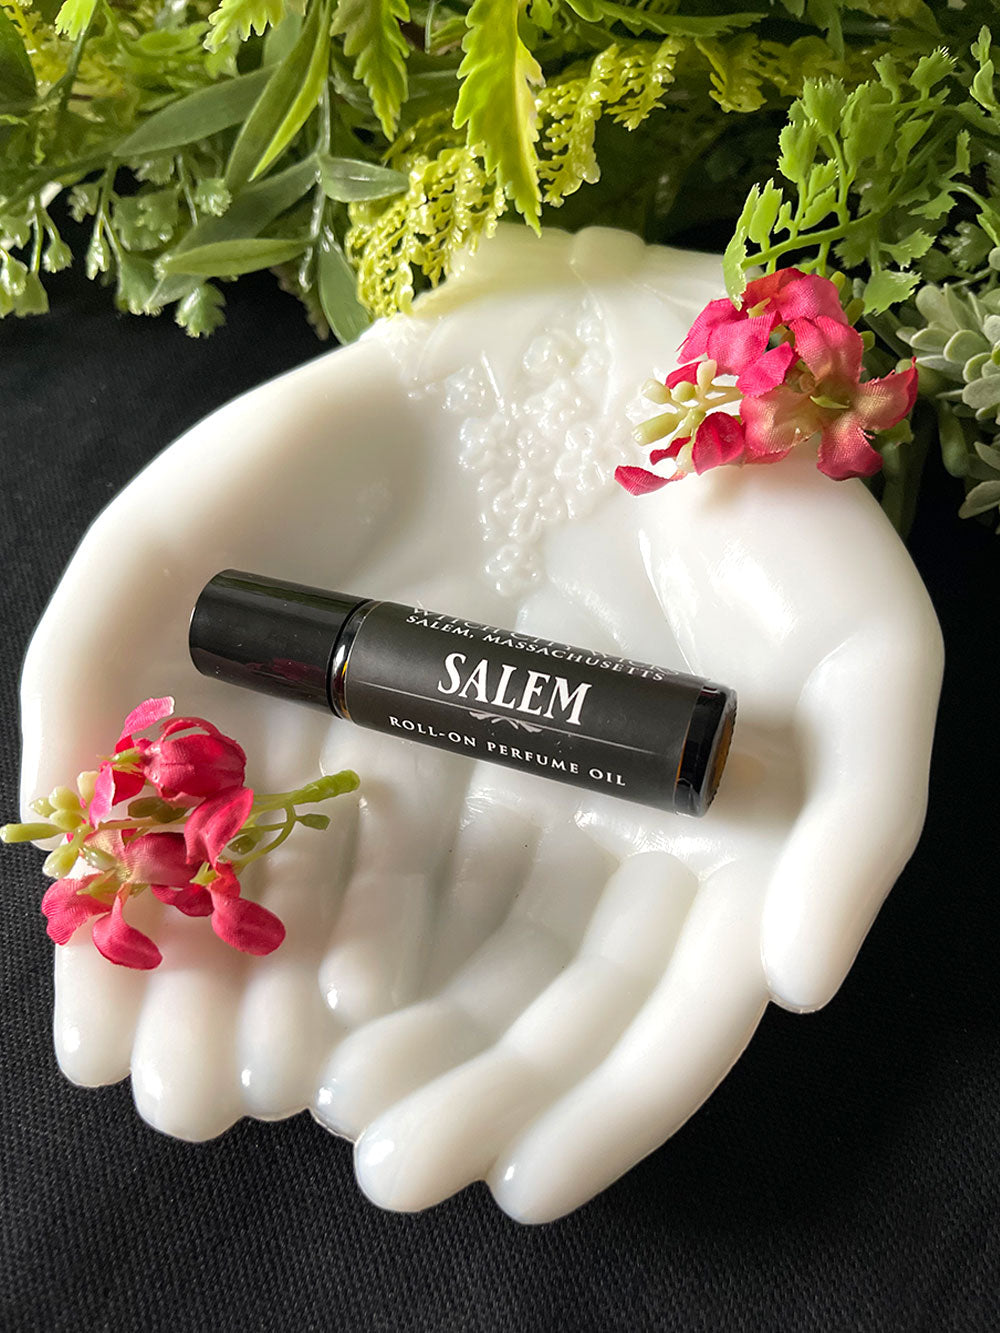 Salem roll-on perfume oil – Witch City Wicks